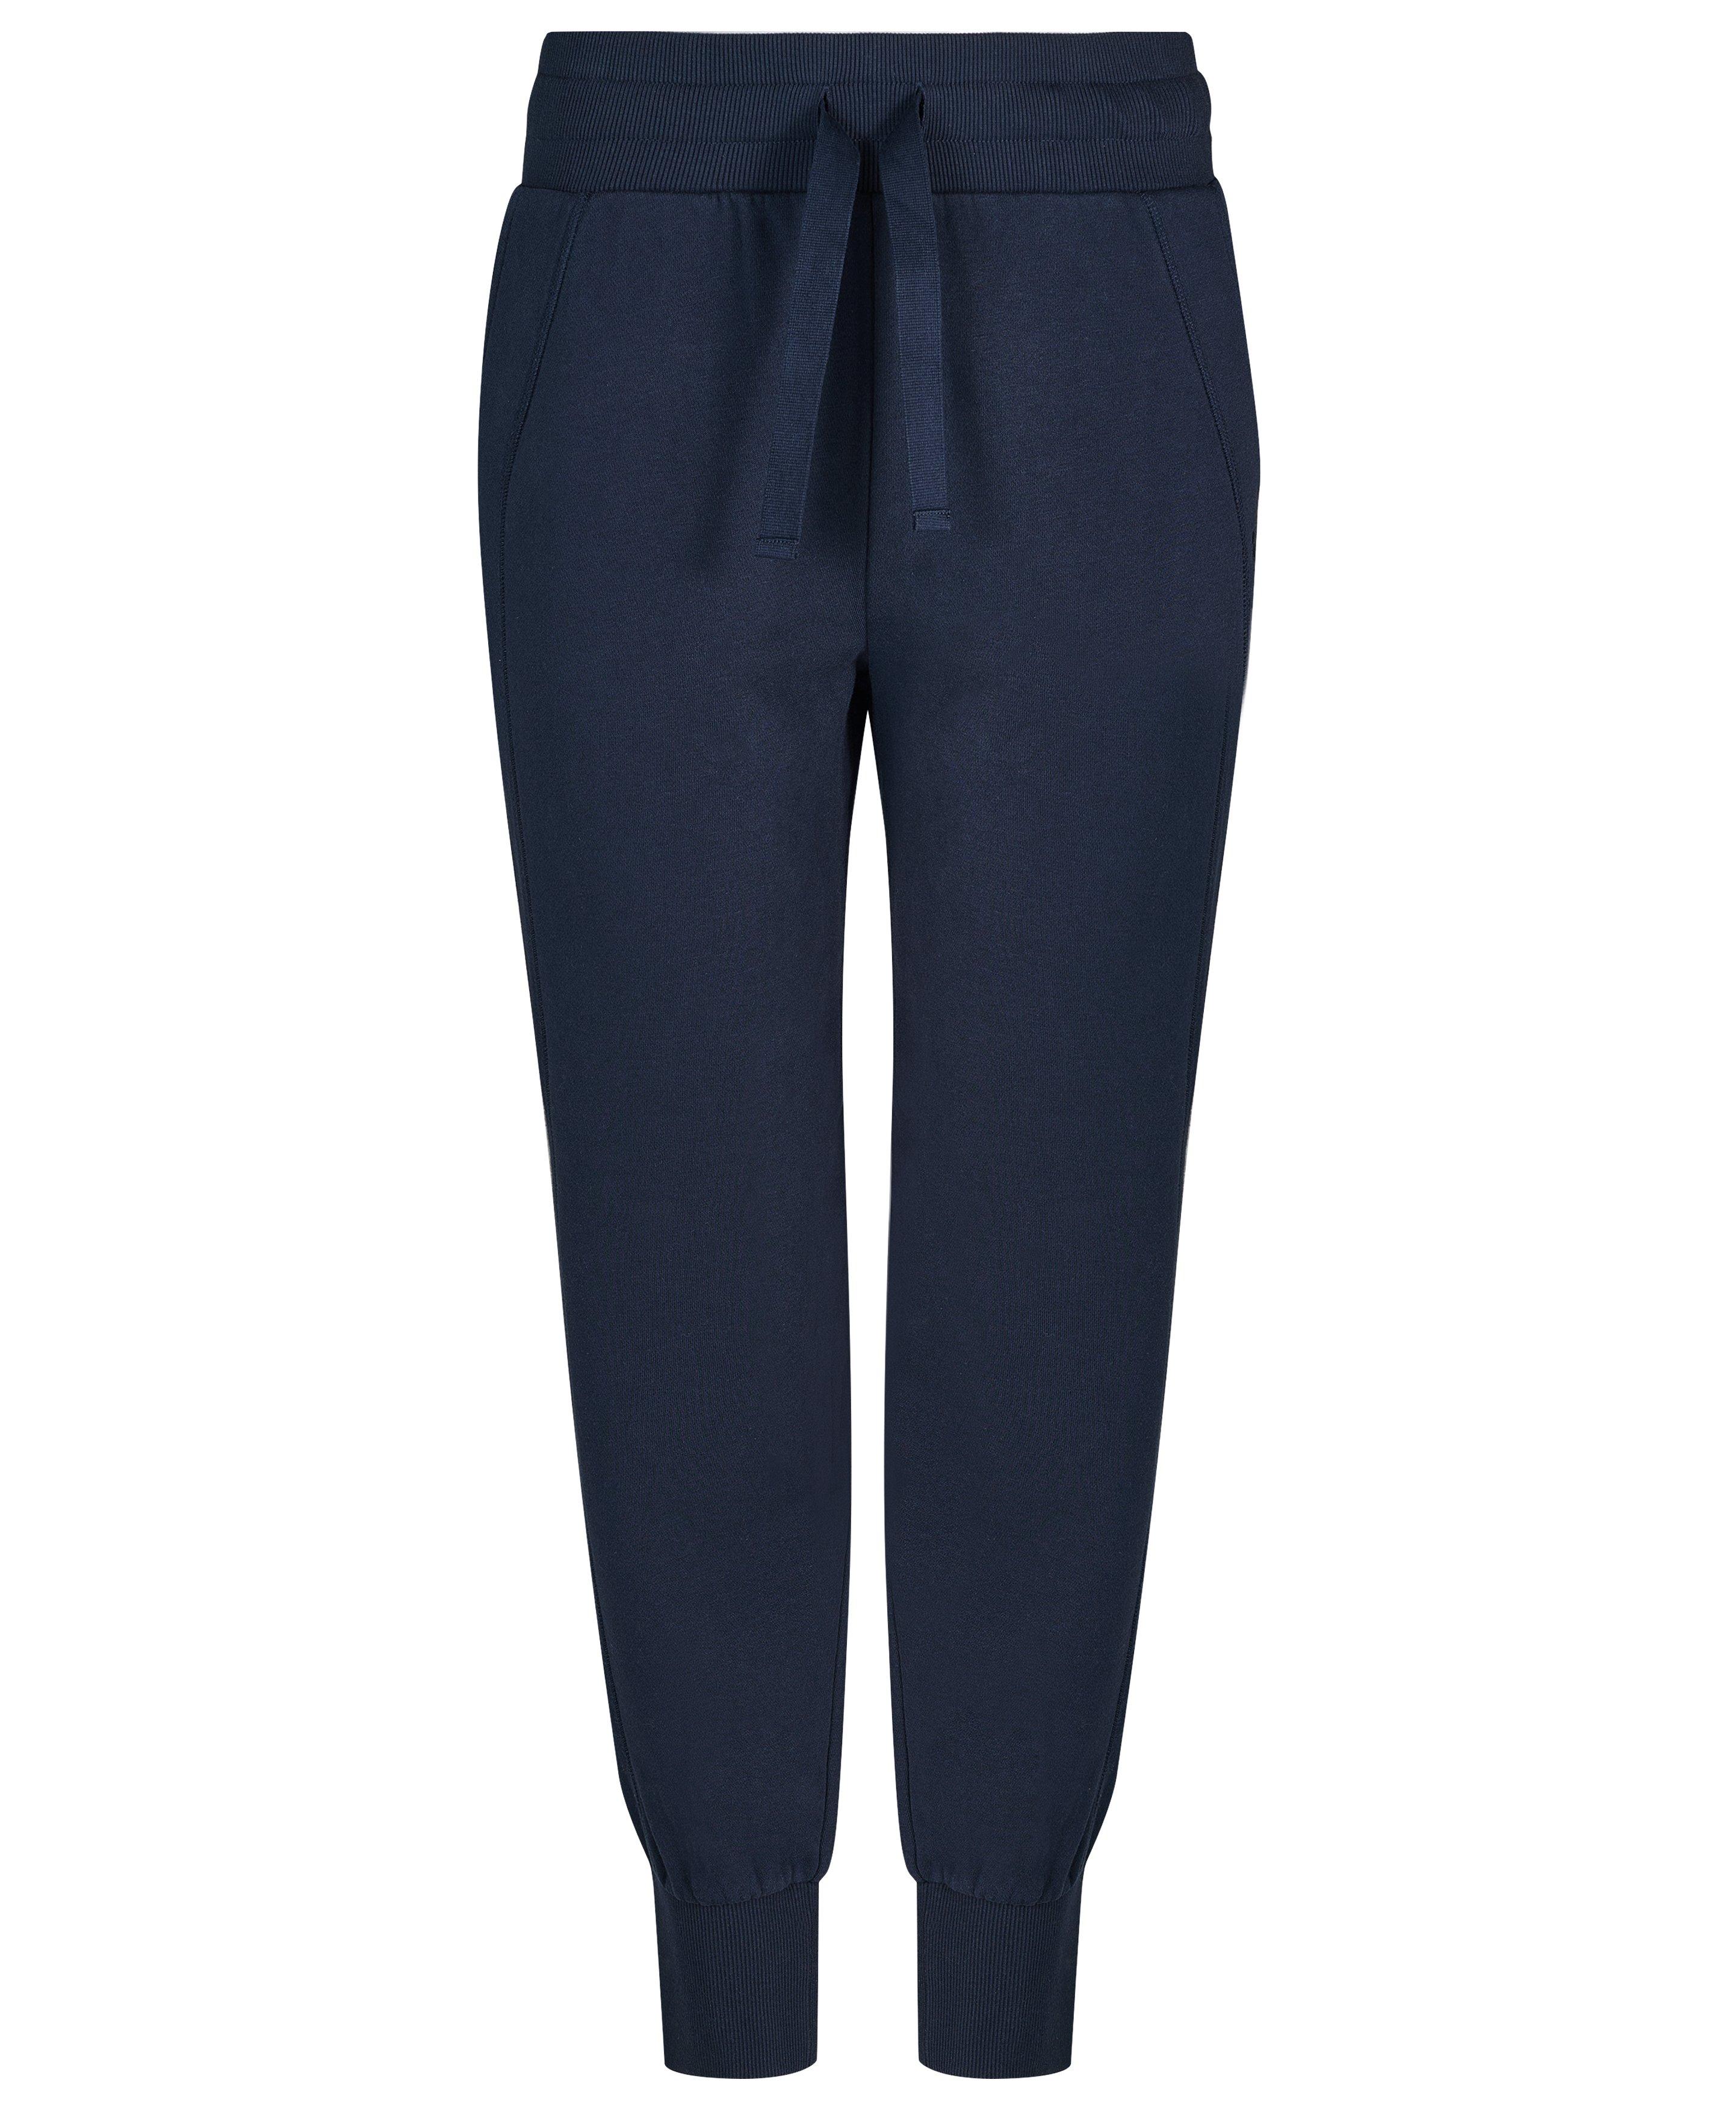 Revive Cuffed Jogger - Navy Blue, Women's Pants